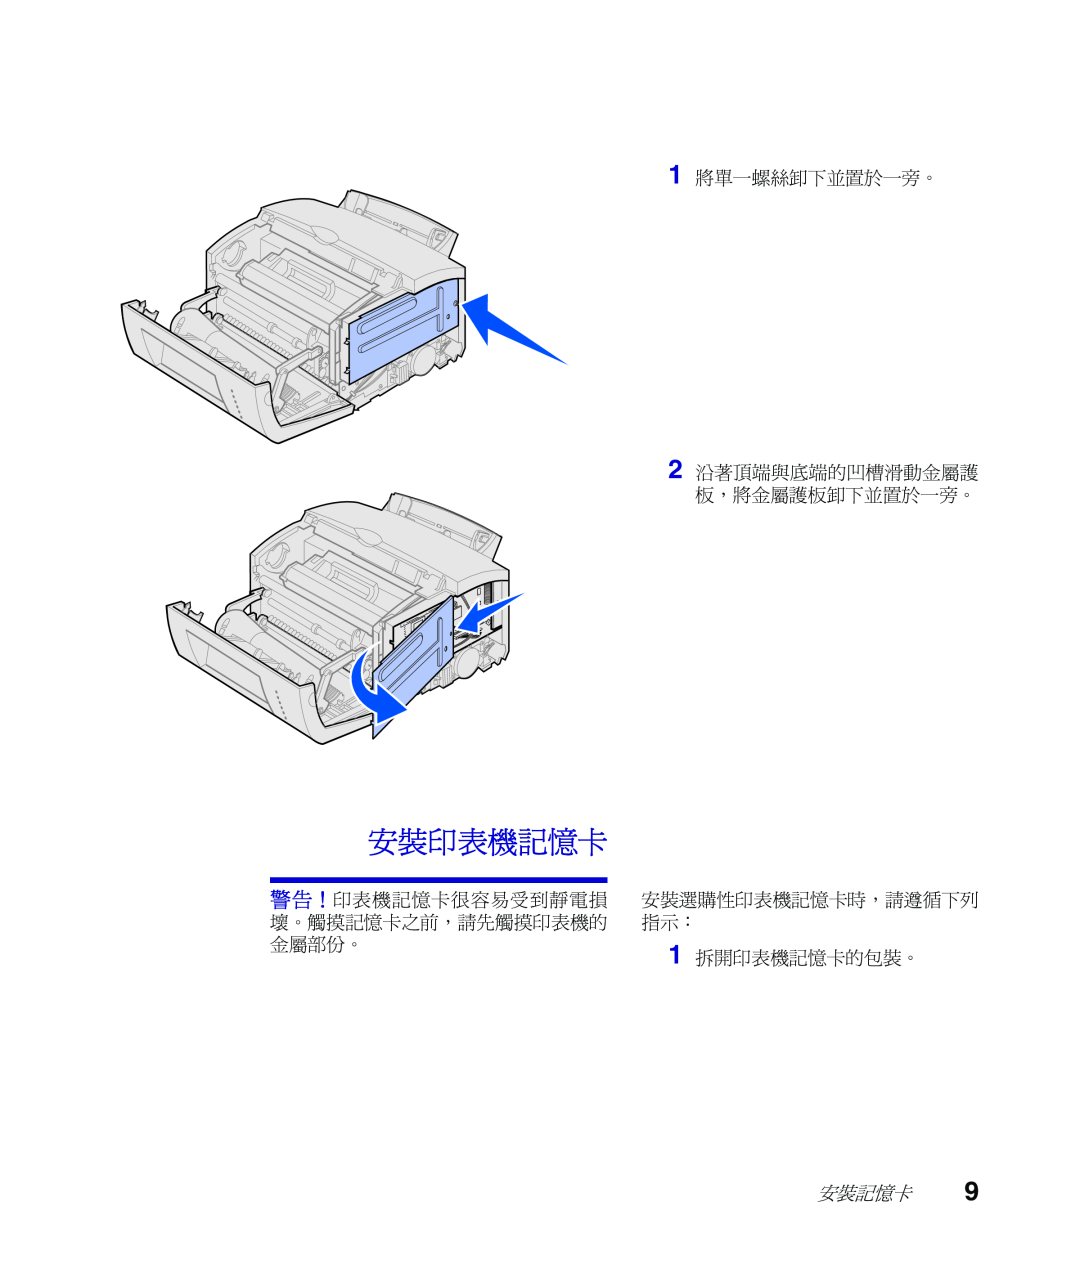 Lexmark Infoprint 1116 setup guide 安裝印表機記憶卡, 1 將單一螺絲卸下並置於一旁。, 1 拆開印表機記憶卡的包裝。, 安裝記憶卡, 2 沿著頂端與底端的凹槽滑動金屬護 板，將金屬護板卸下並置於一旁。 